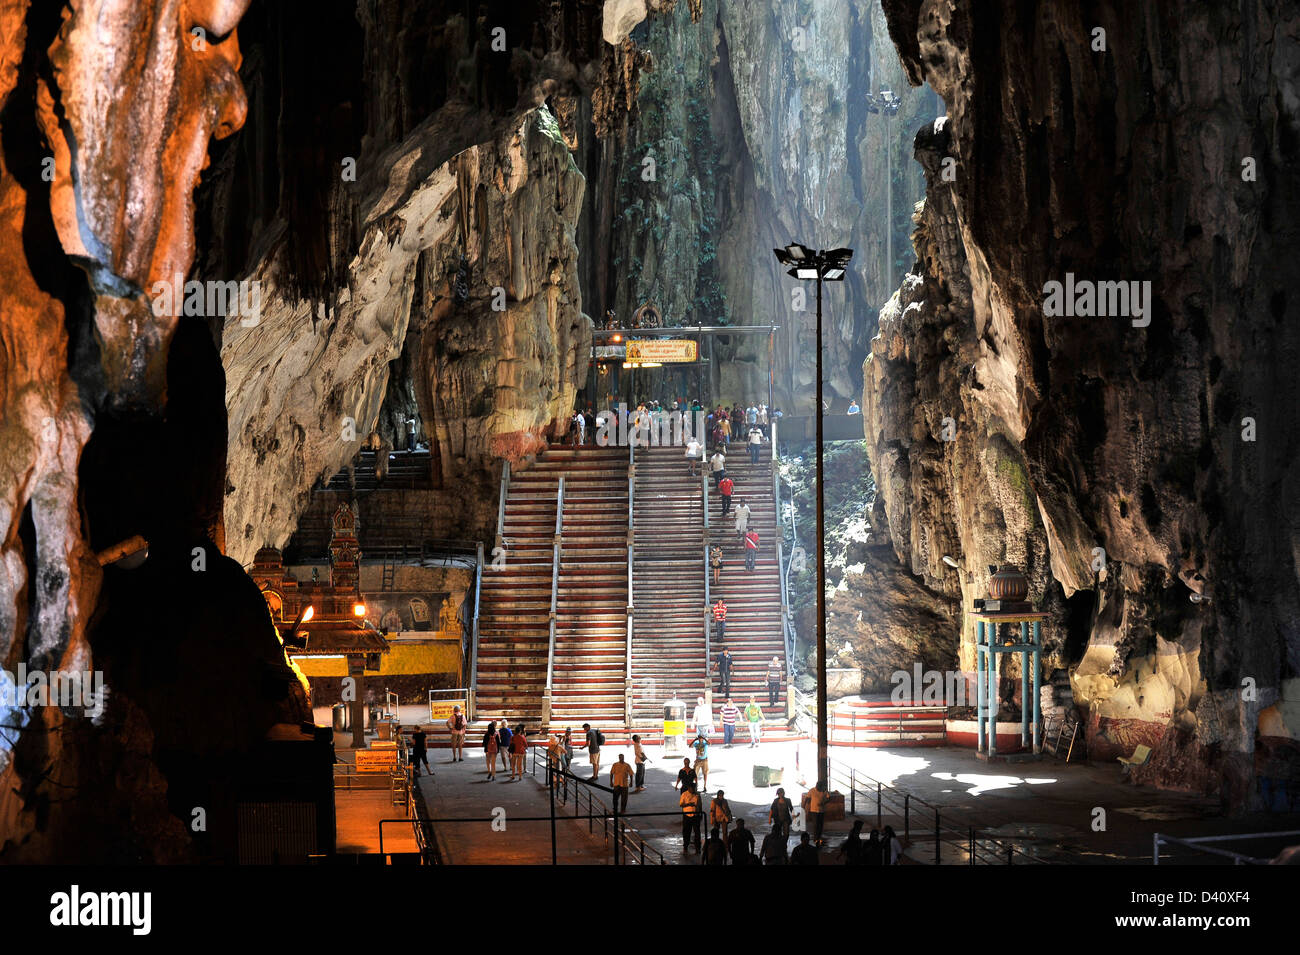 Asia Malaysia Kuala Lumpur Hindu temple Batu Caves Stock Photo